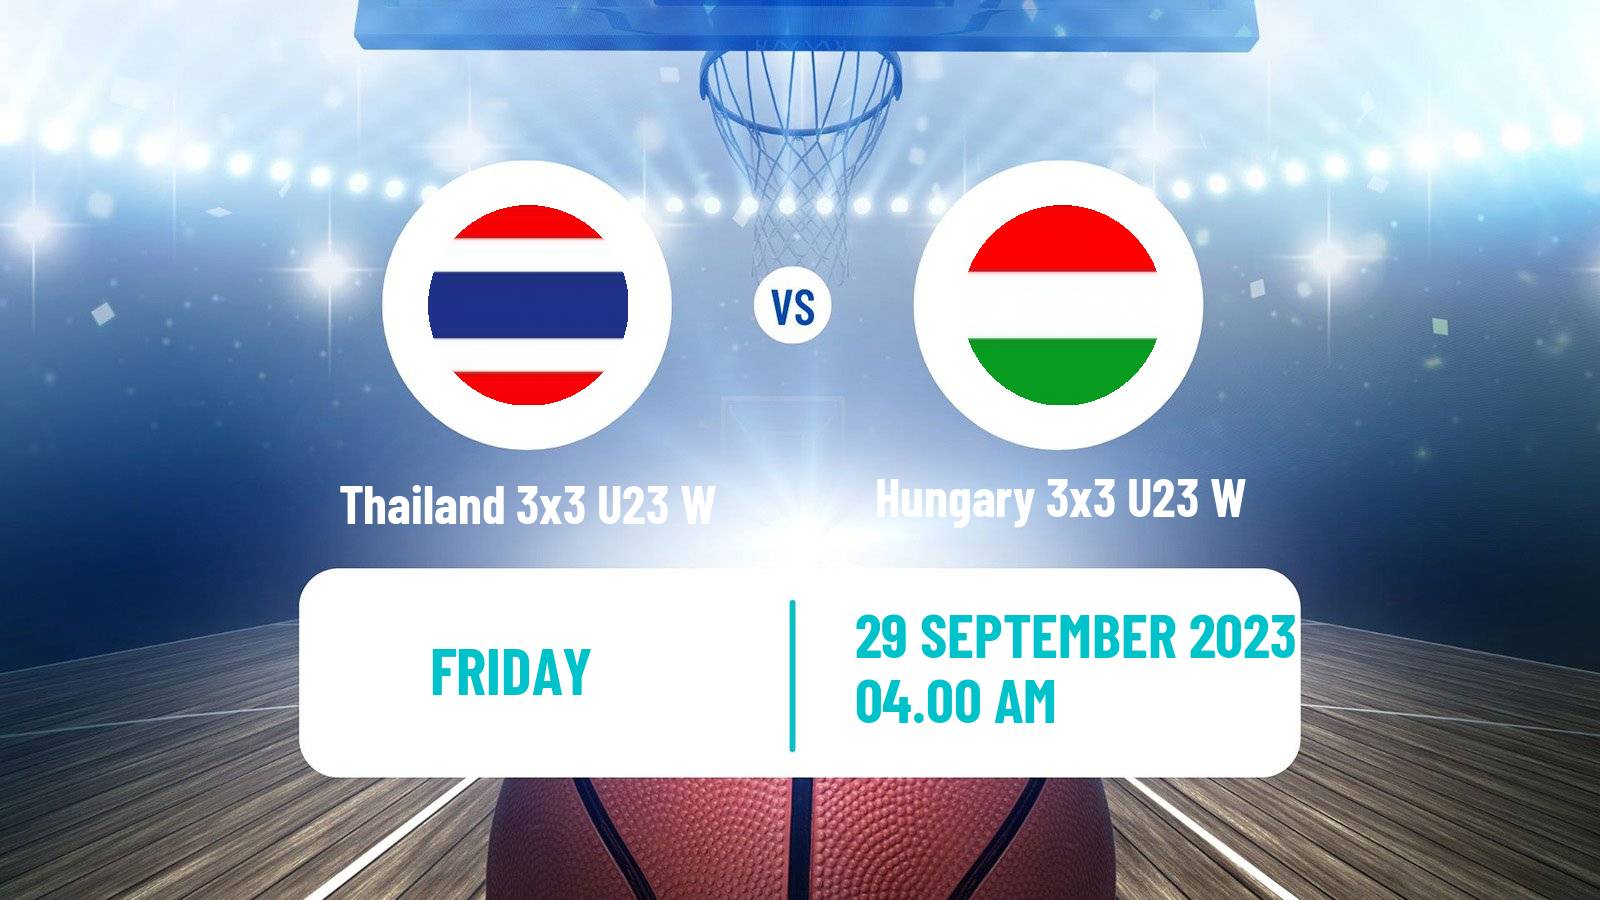 Basketball World Cup Basketball 3x3 U23 Women Thailand 3x3 U23 W - Hungary 3x3 U23 W